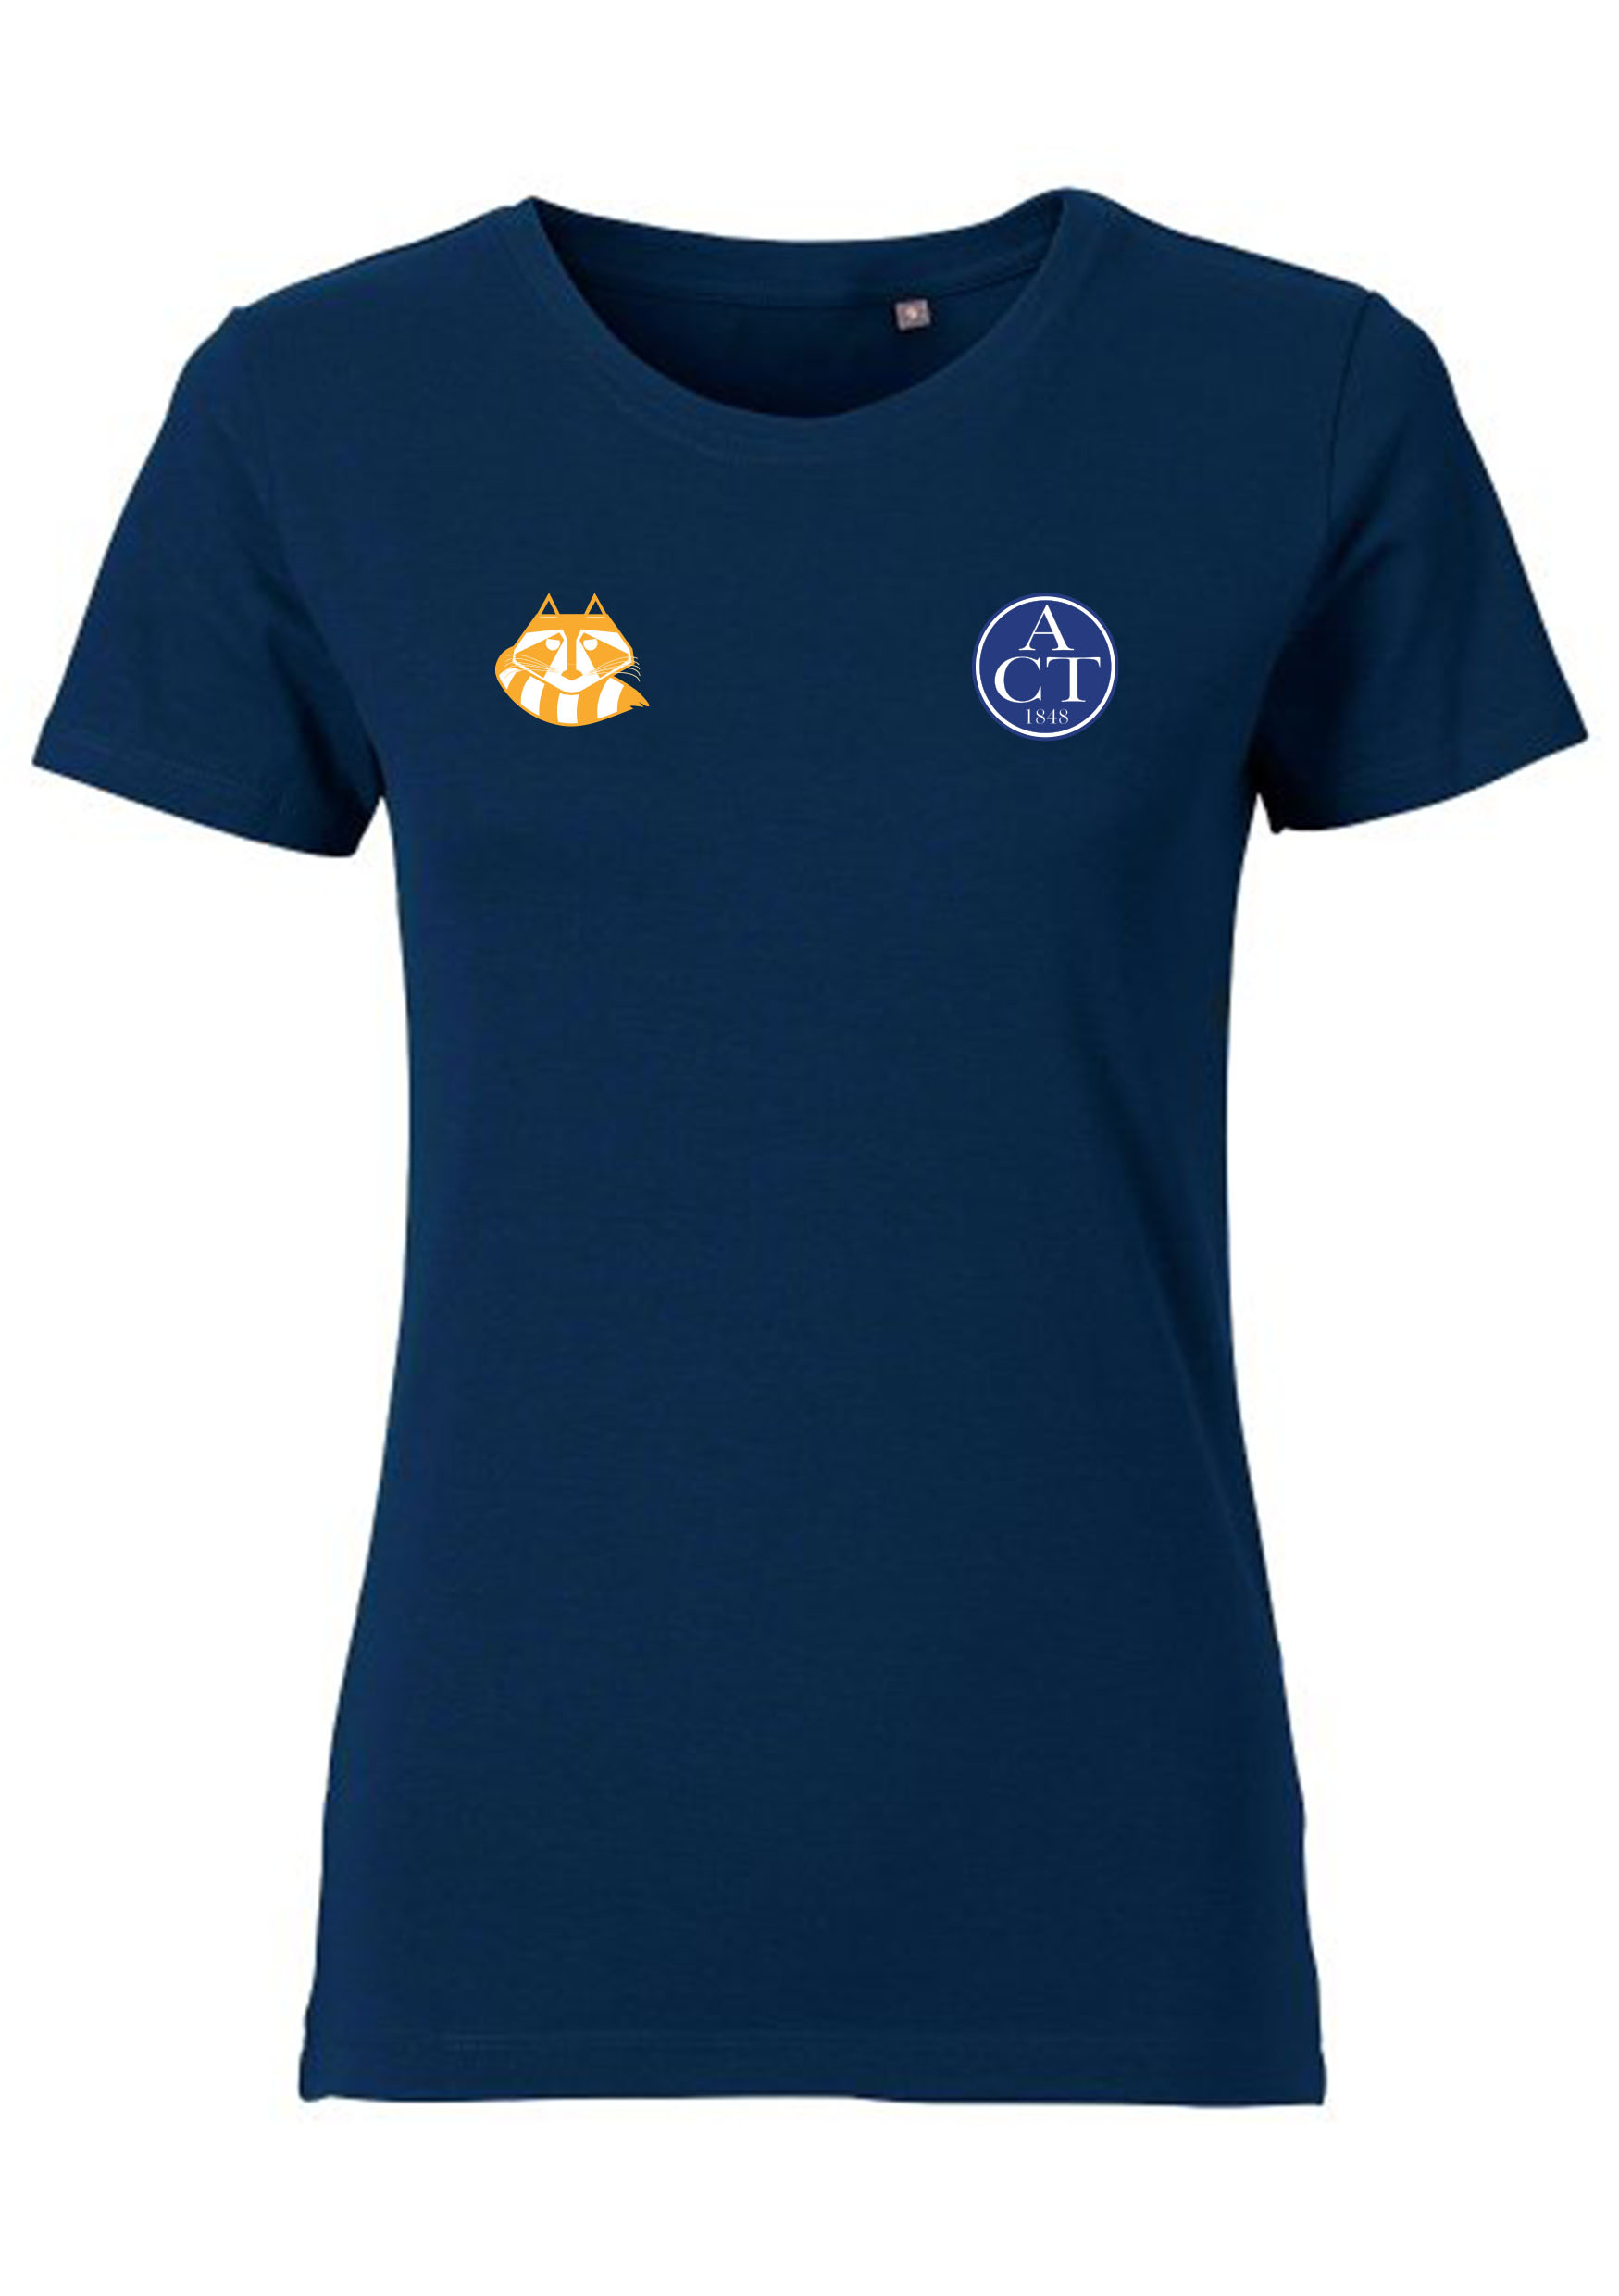 ACT Triathlon T-Shirt Damen navy